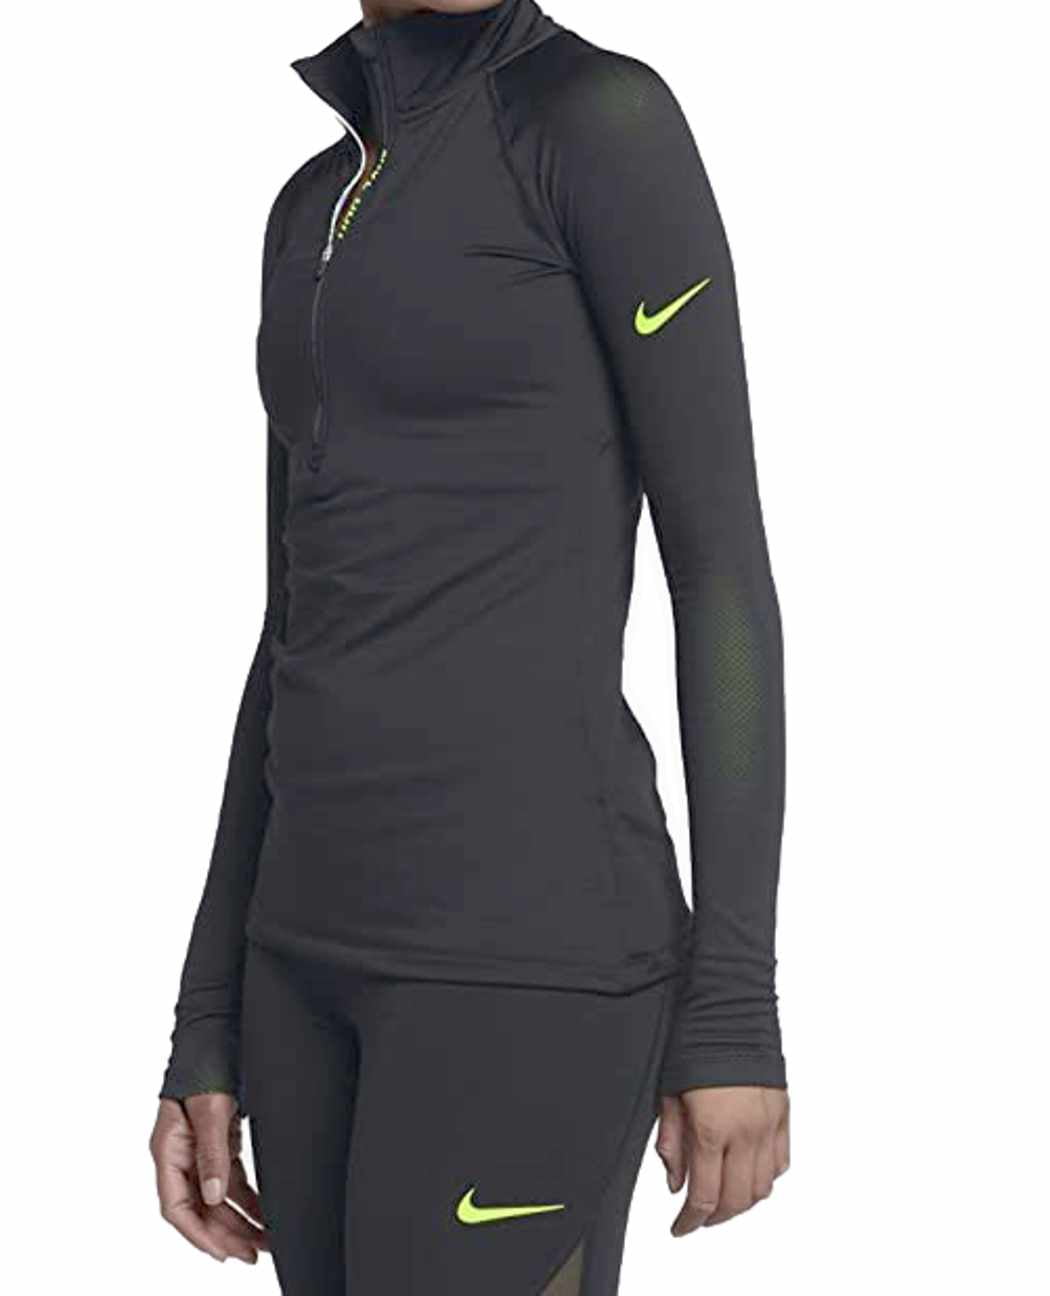 nike pro hyperwarm women's long sleeve training top